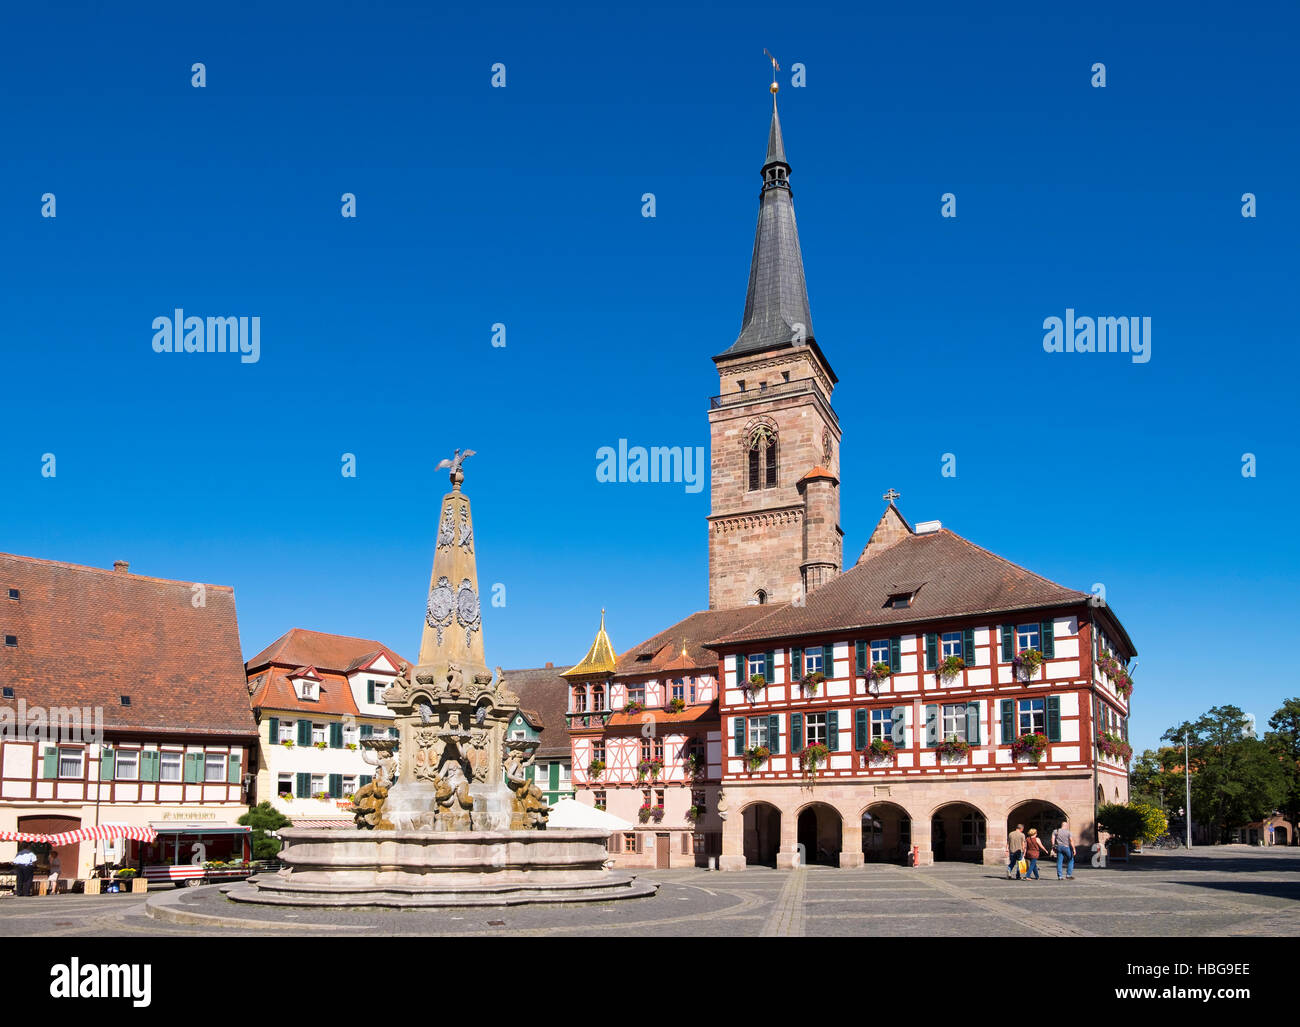 Schöner Brunnen, fountain, town hall and church, Königsplatz, Schwabach, Middle Franconia, Franconia, Bavaria, Germany Stock Photo